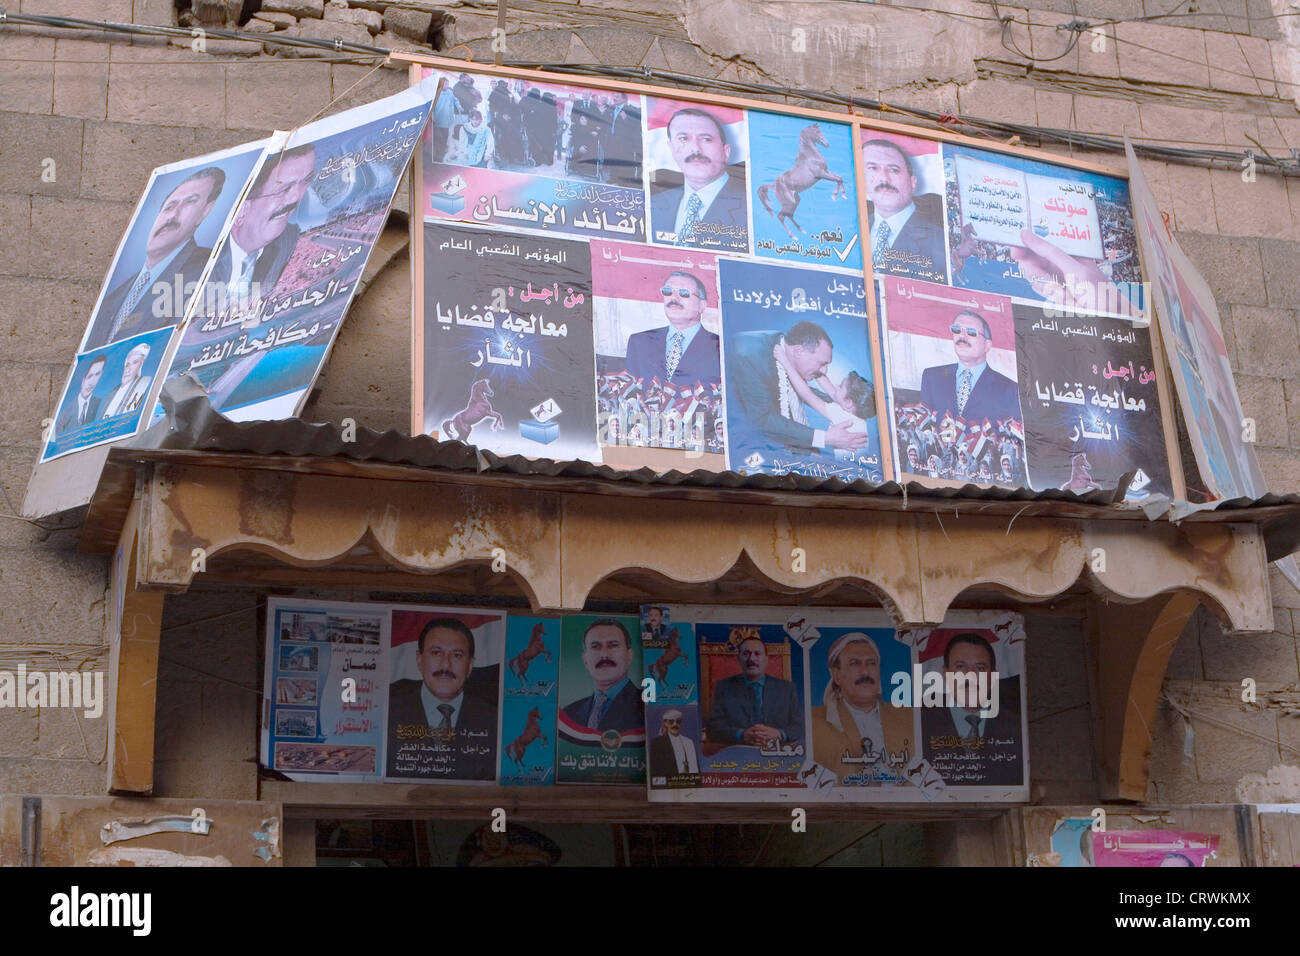 Posters of Yemeni President Ali Abdallah Saleh decorate an awning, Old City, Sana'a, Amanat al-Asimah, Yemen Stock Photo